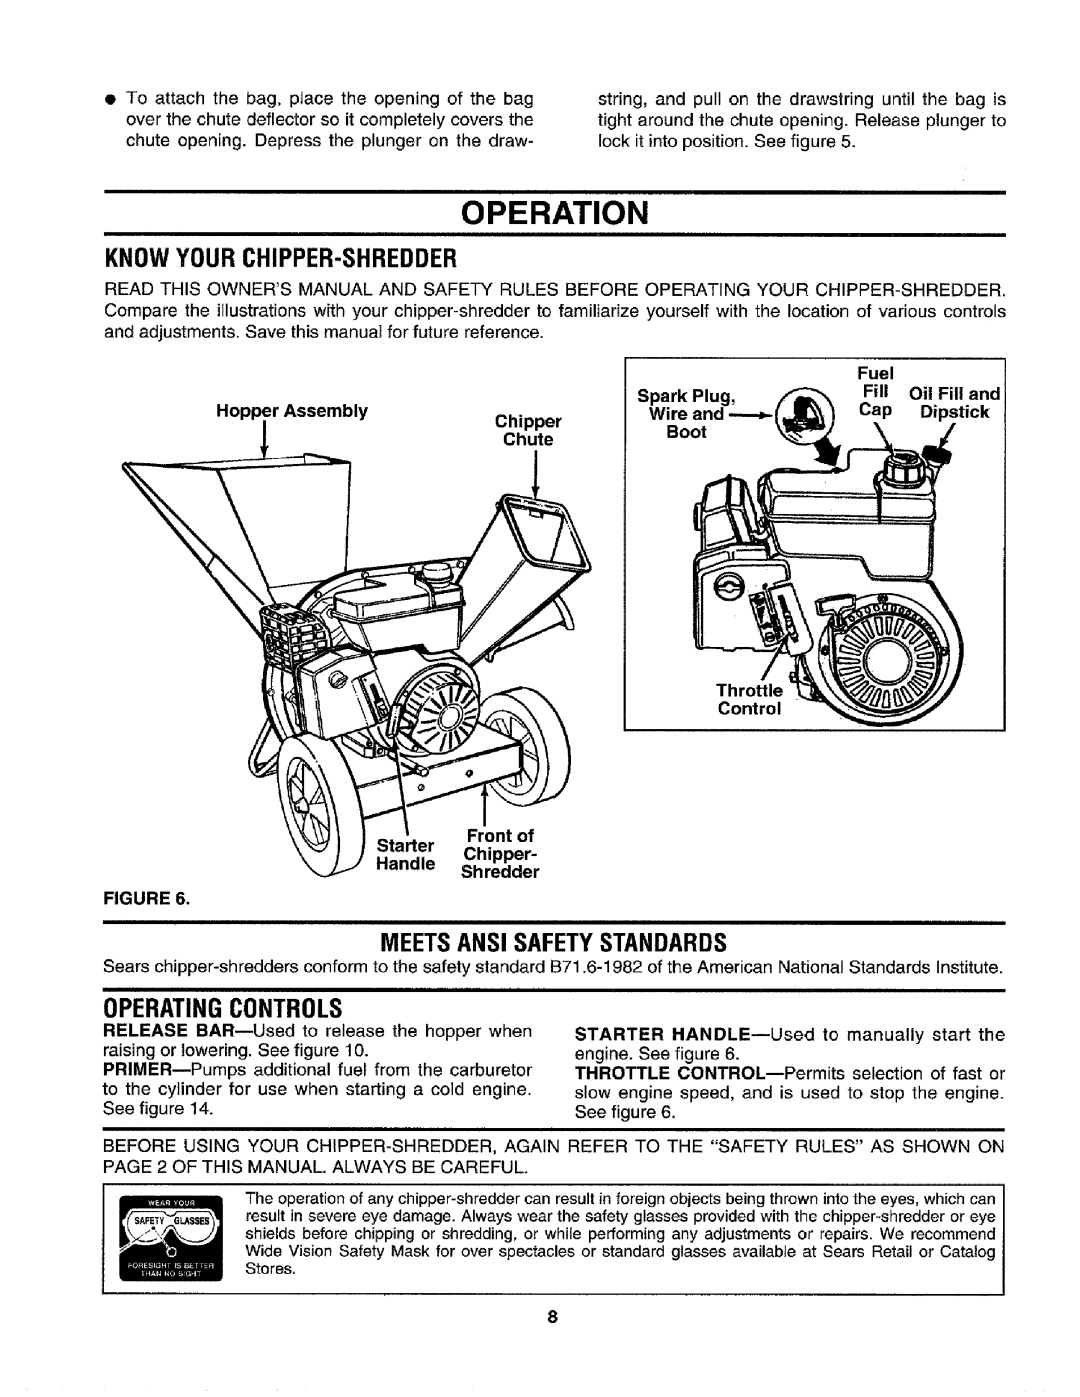 Craftsman 79585 manual Operation, Know Your Chipper-Shredder, Meets Ansi Safetystandards, Operatingcontrols 